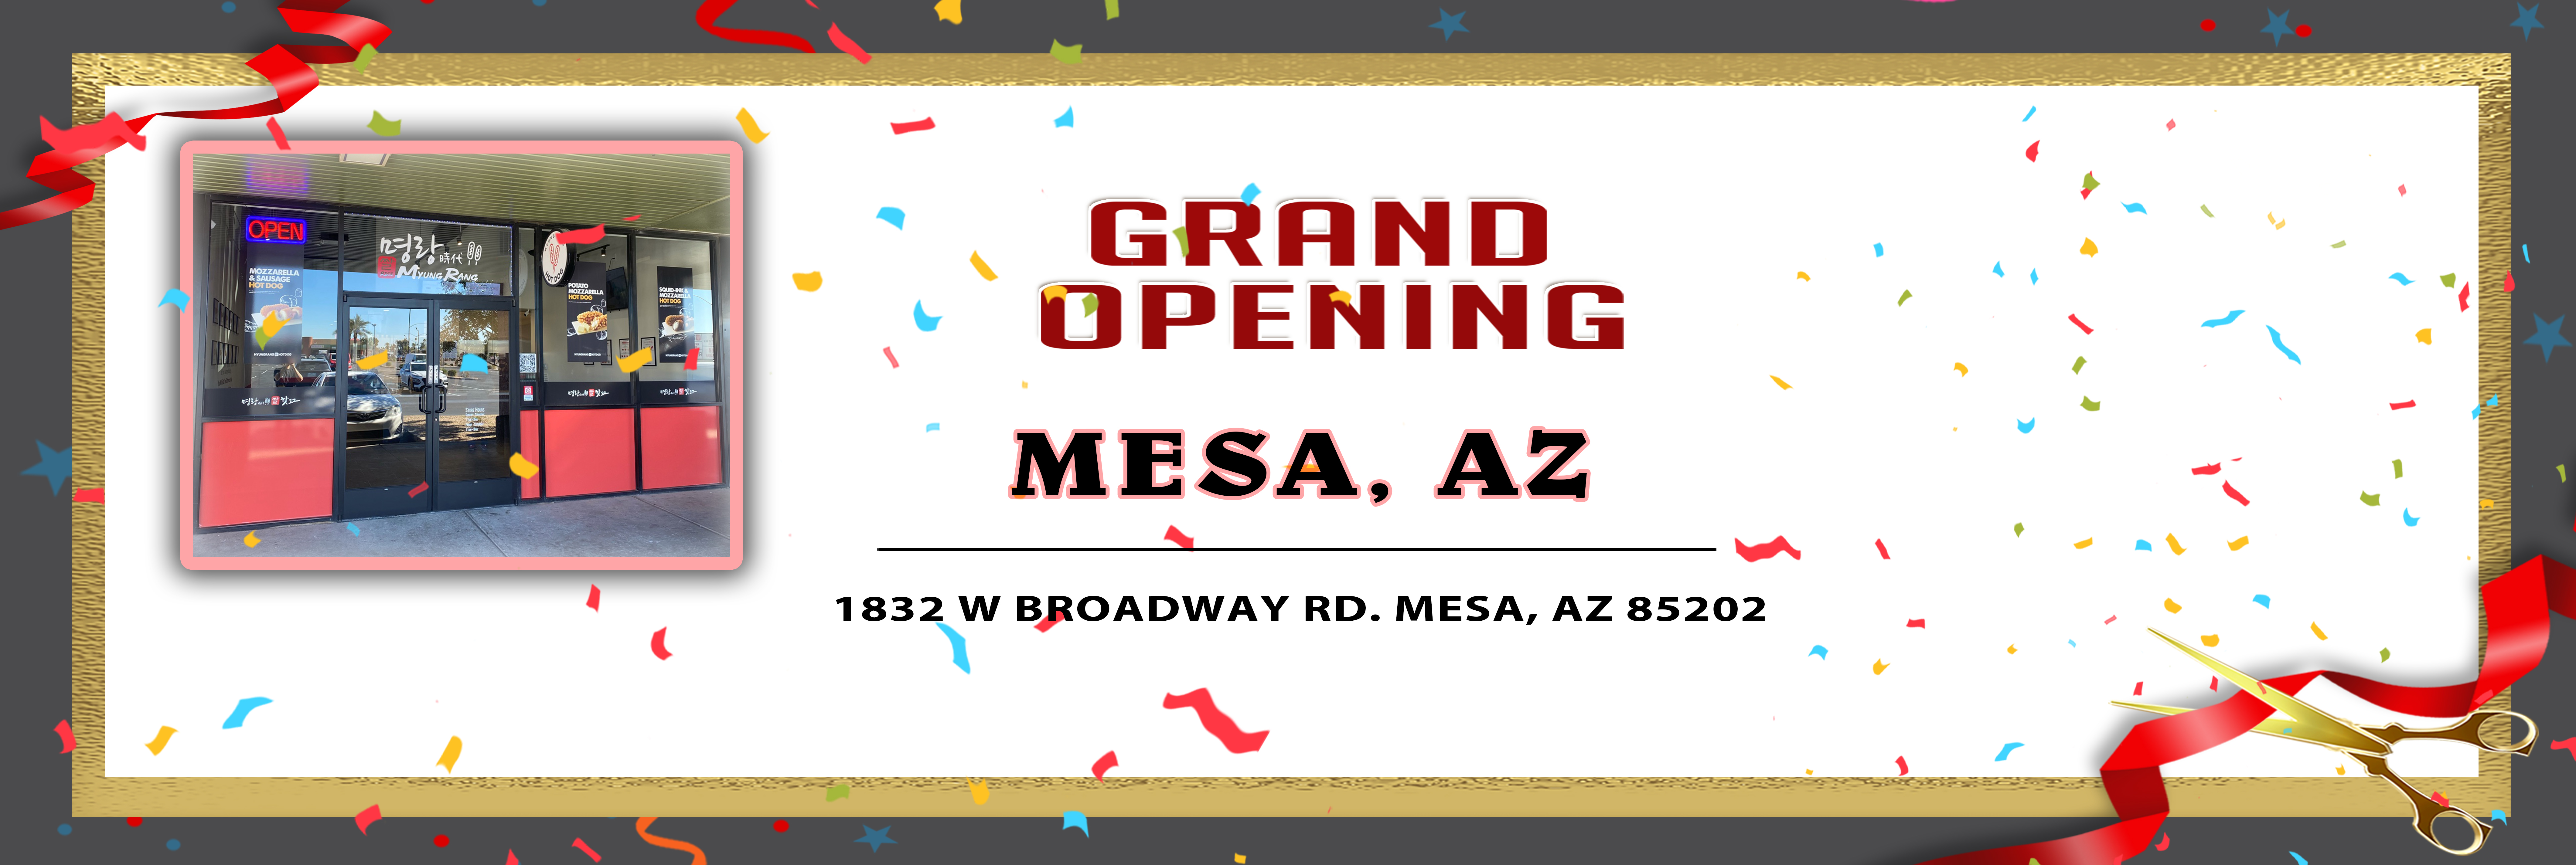 Grand Opening Mesa